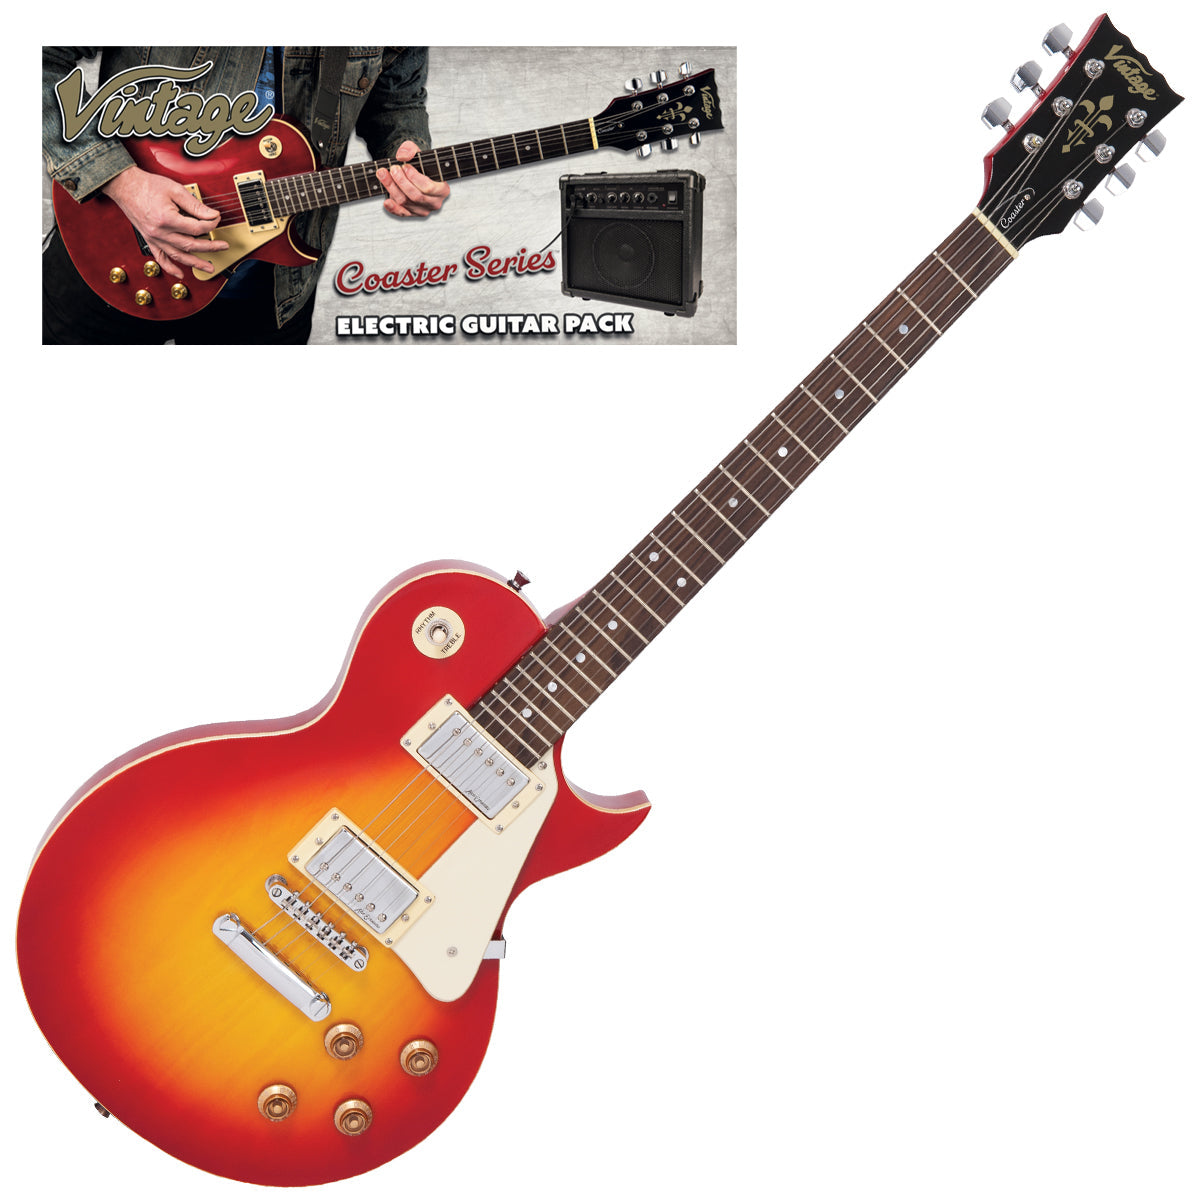 Vintage V10 Coaster Series Electric Guitar Pack | Cherry Sunburst